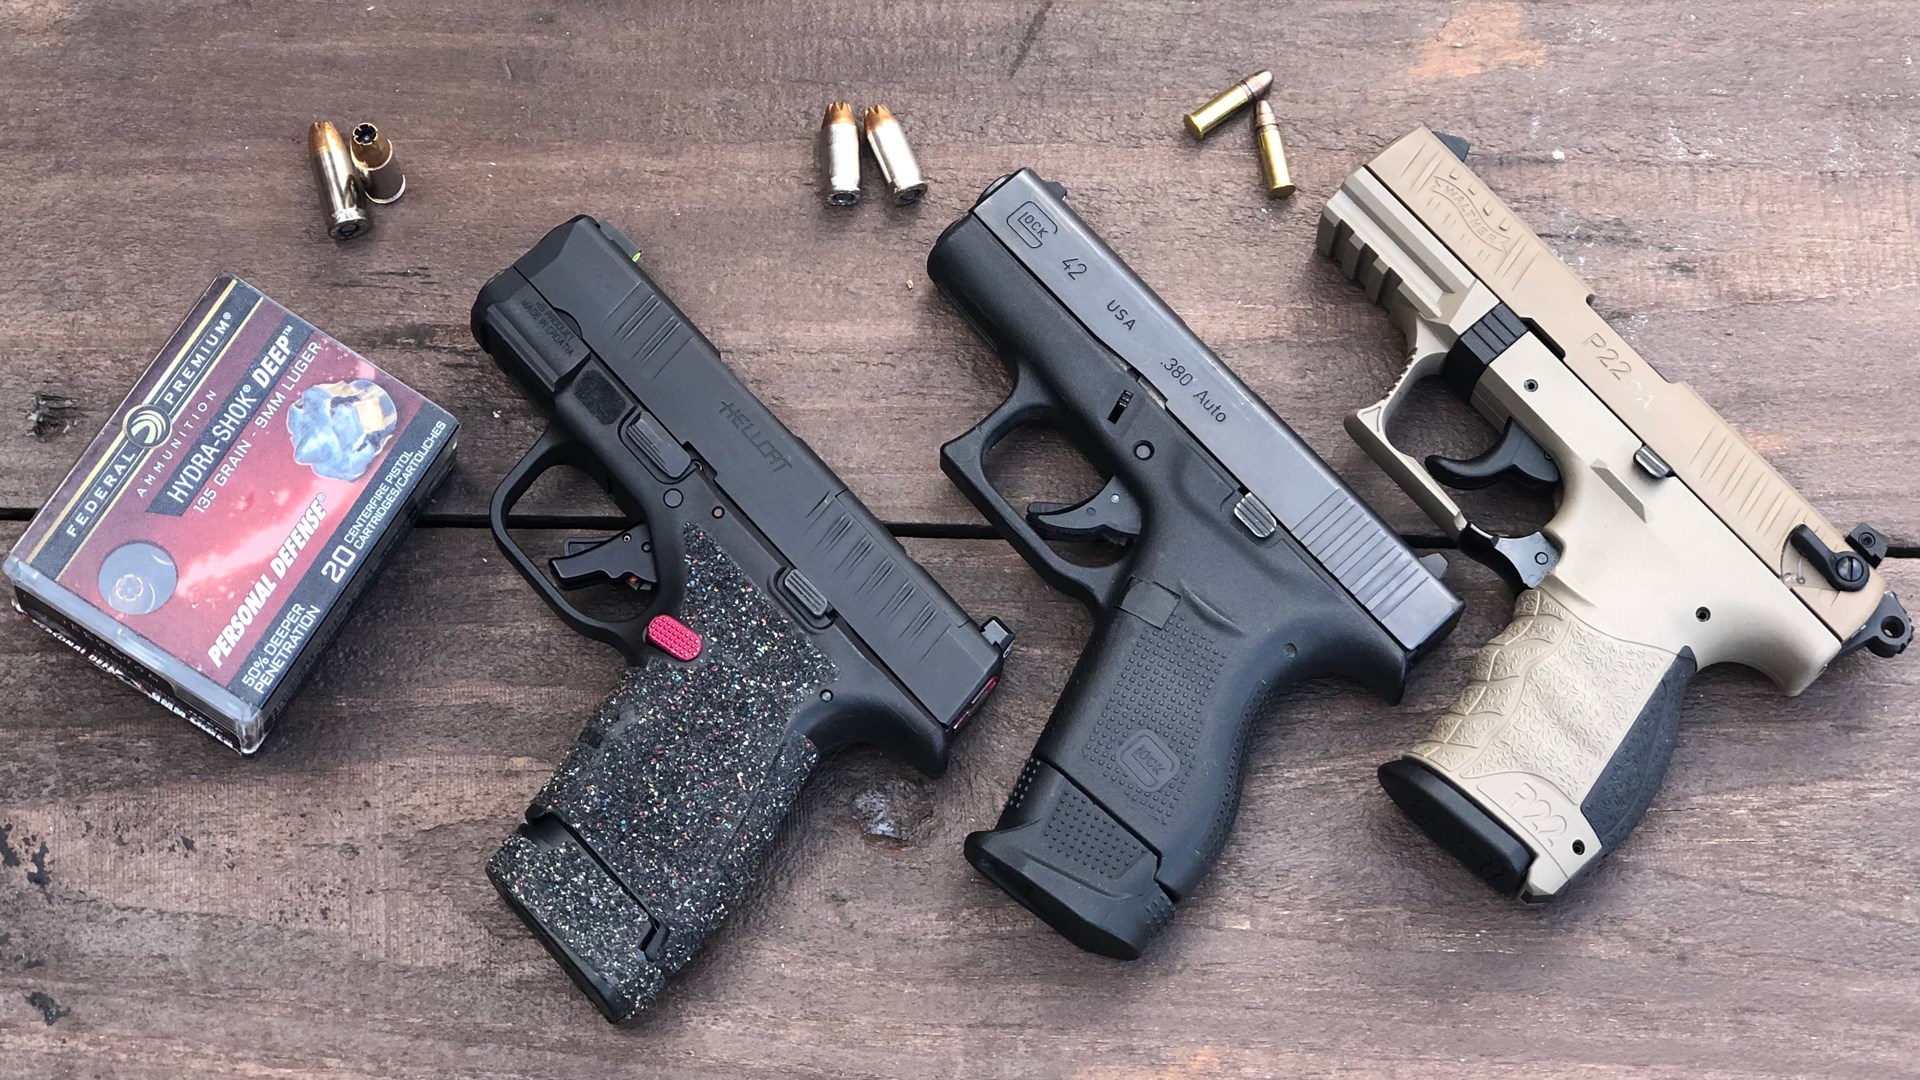 three pistols on table with ammunition